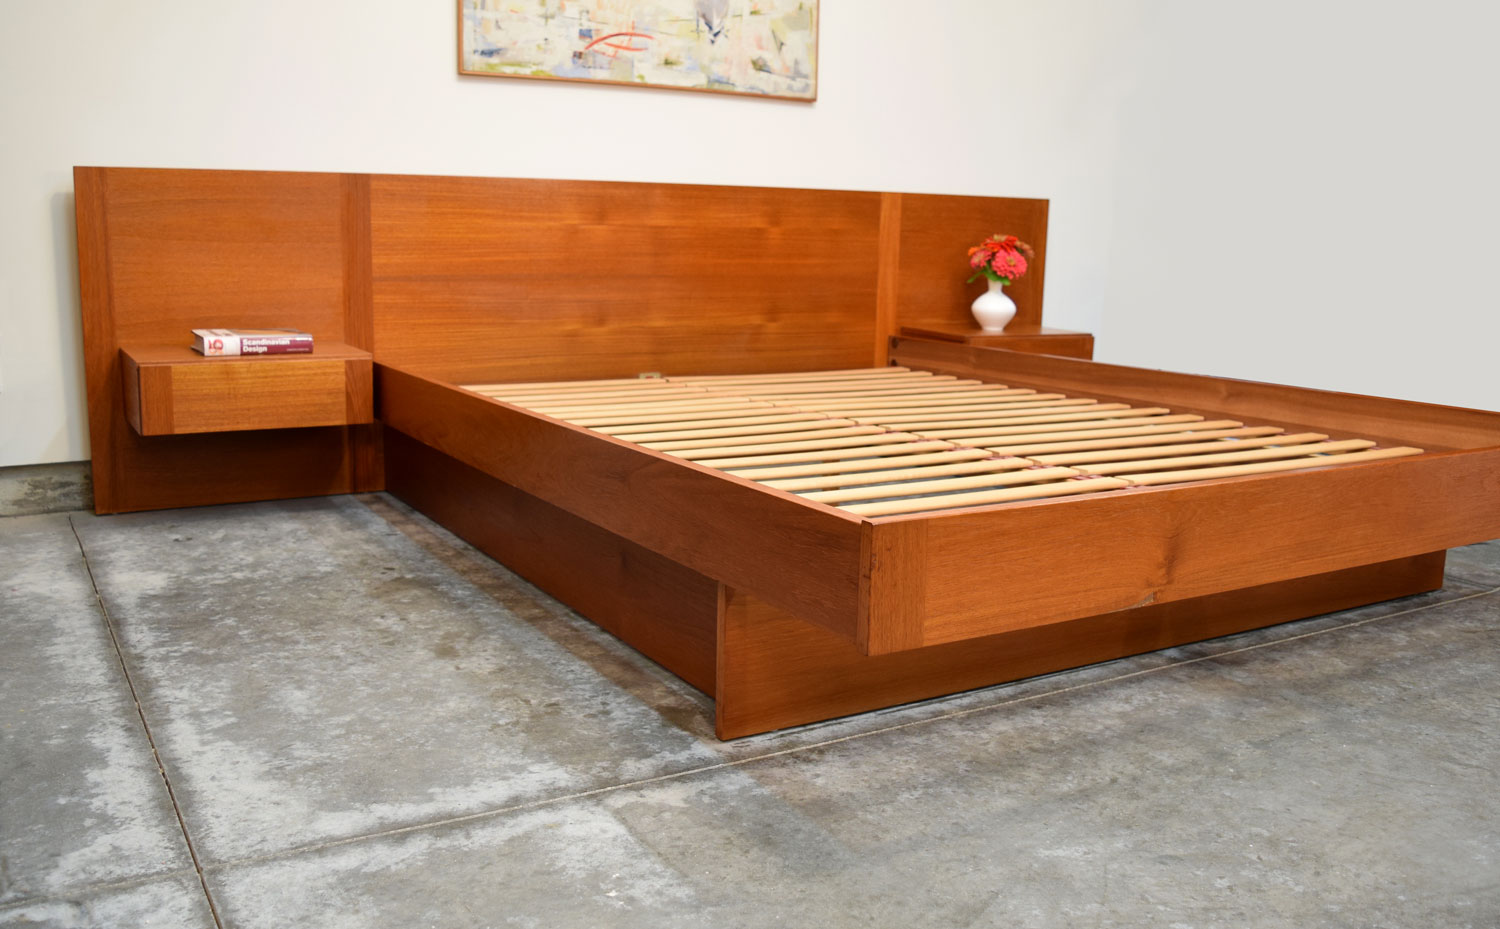 thanh lam giường ngủ gỗ teak